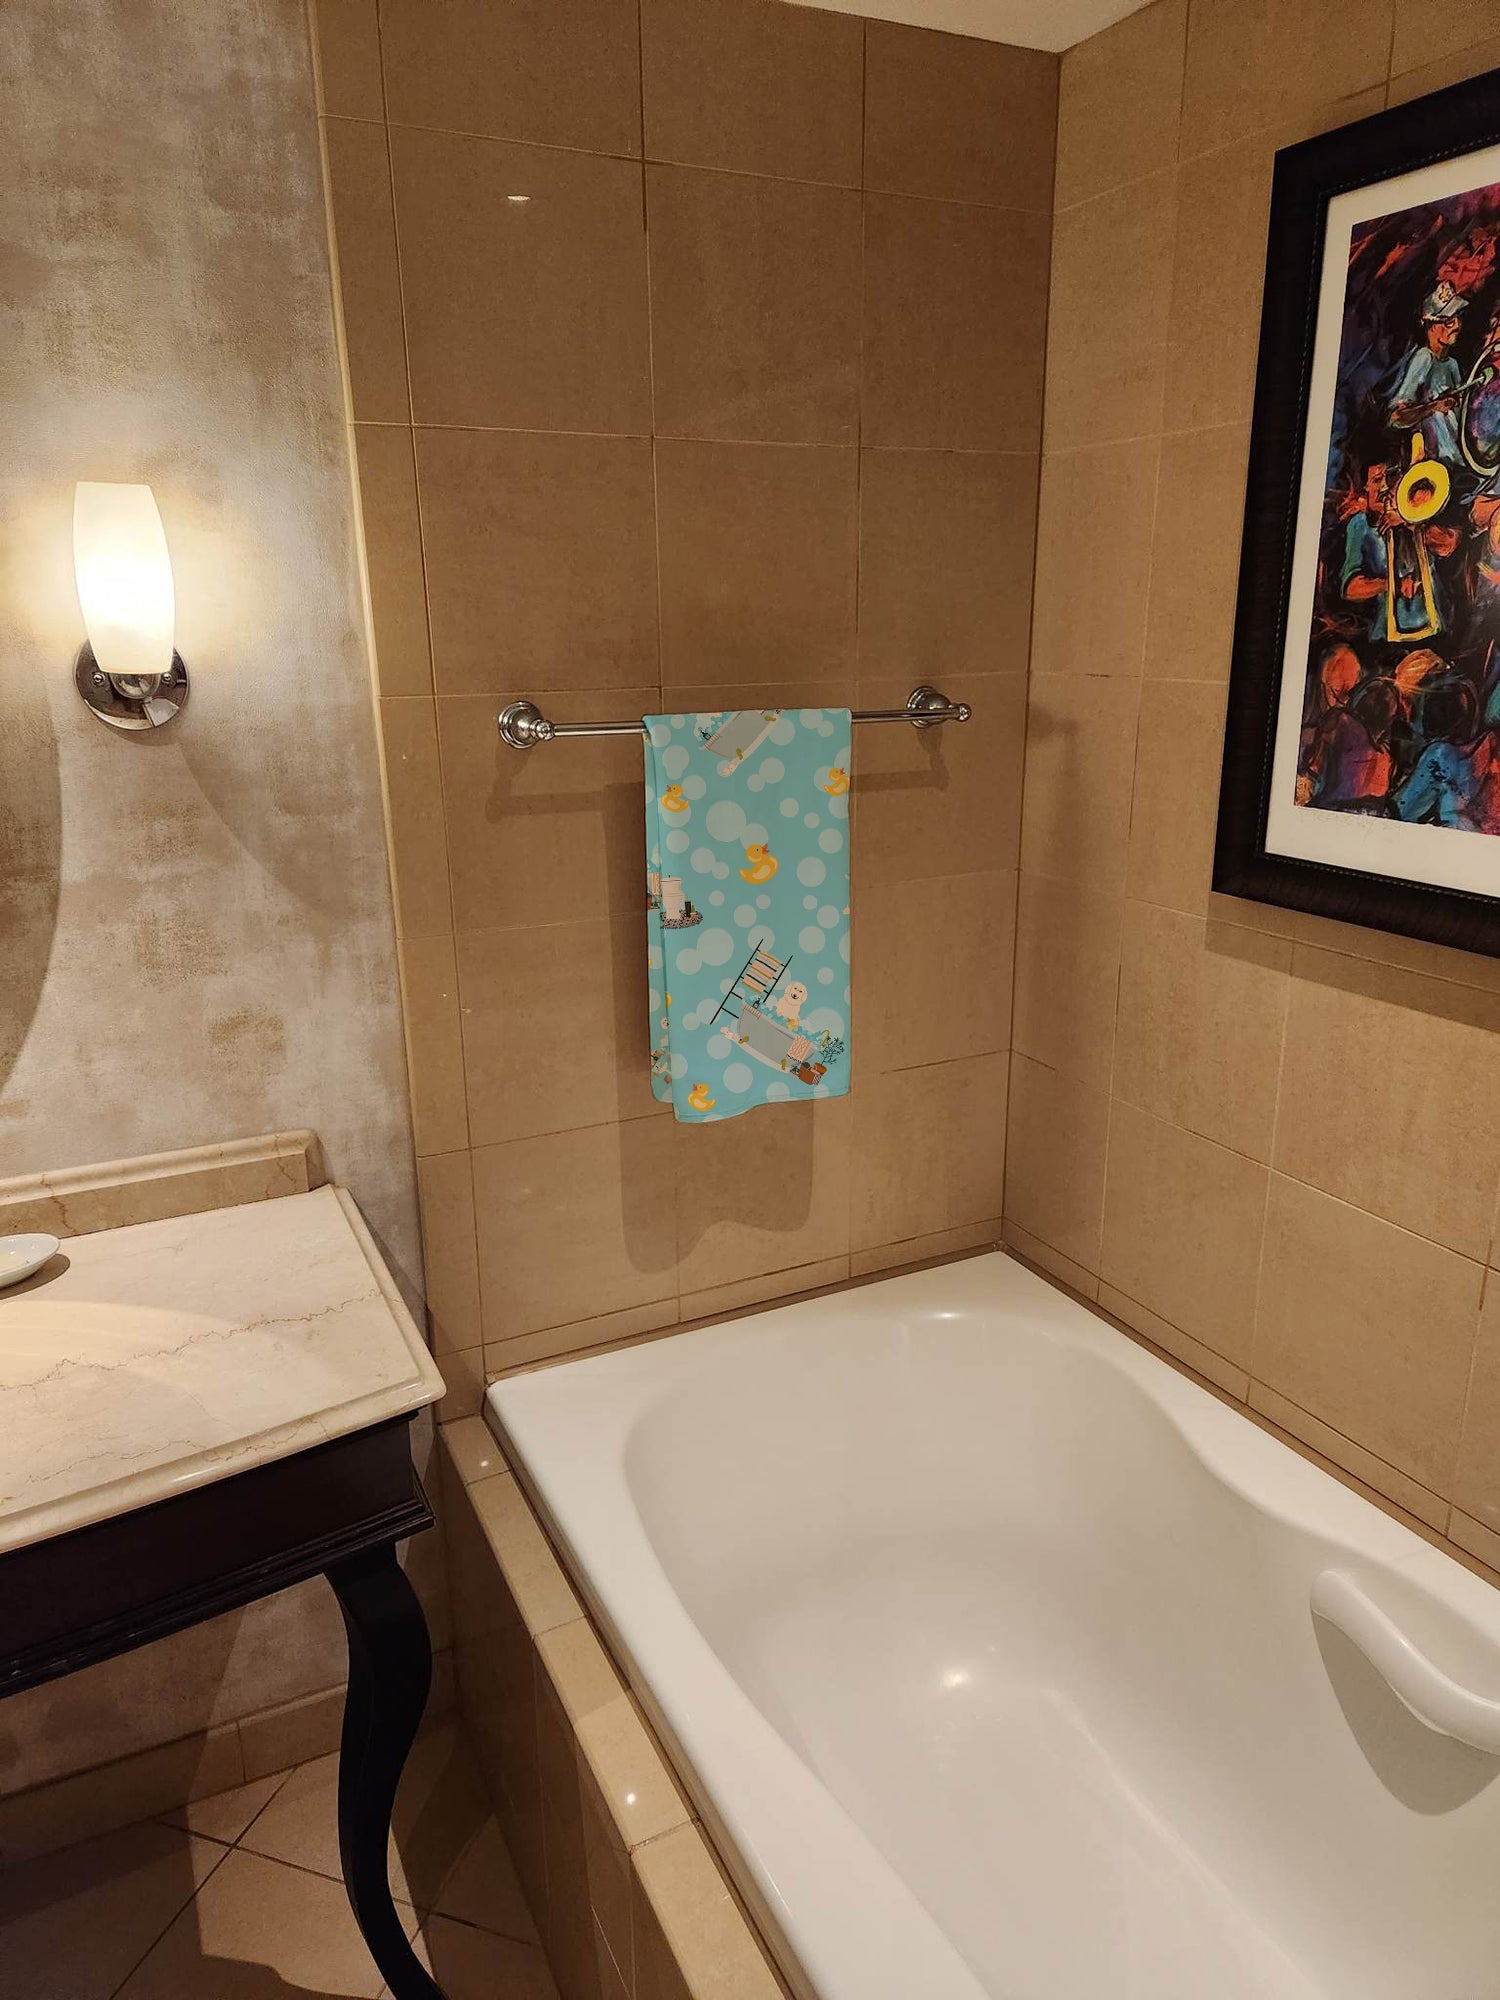 Buy this Great Pyrenese in Bathtub Bath Towel Large